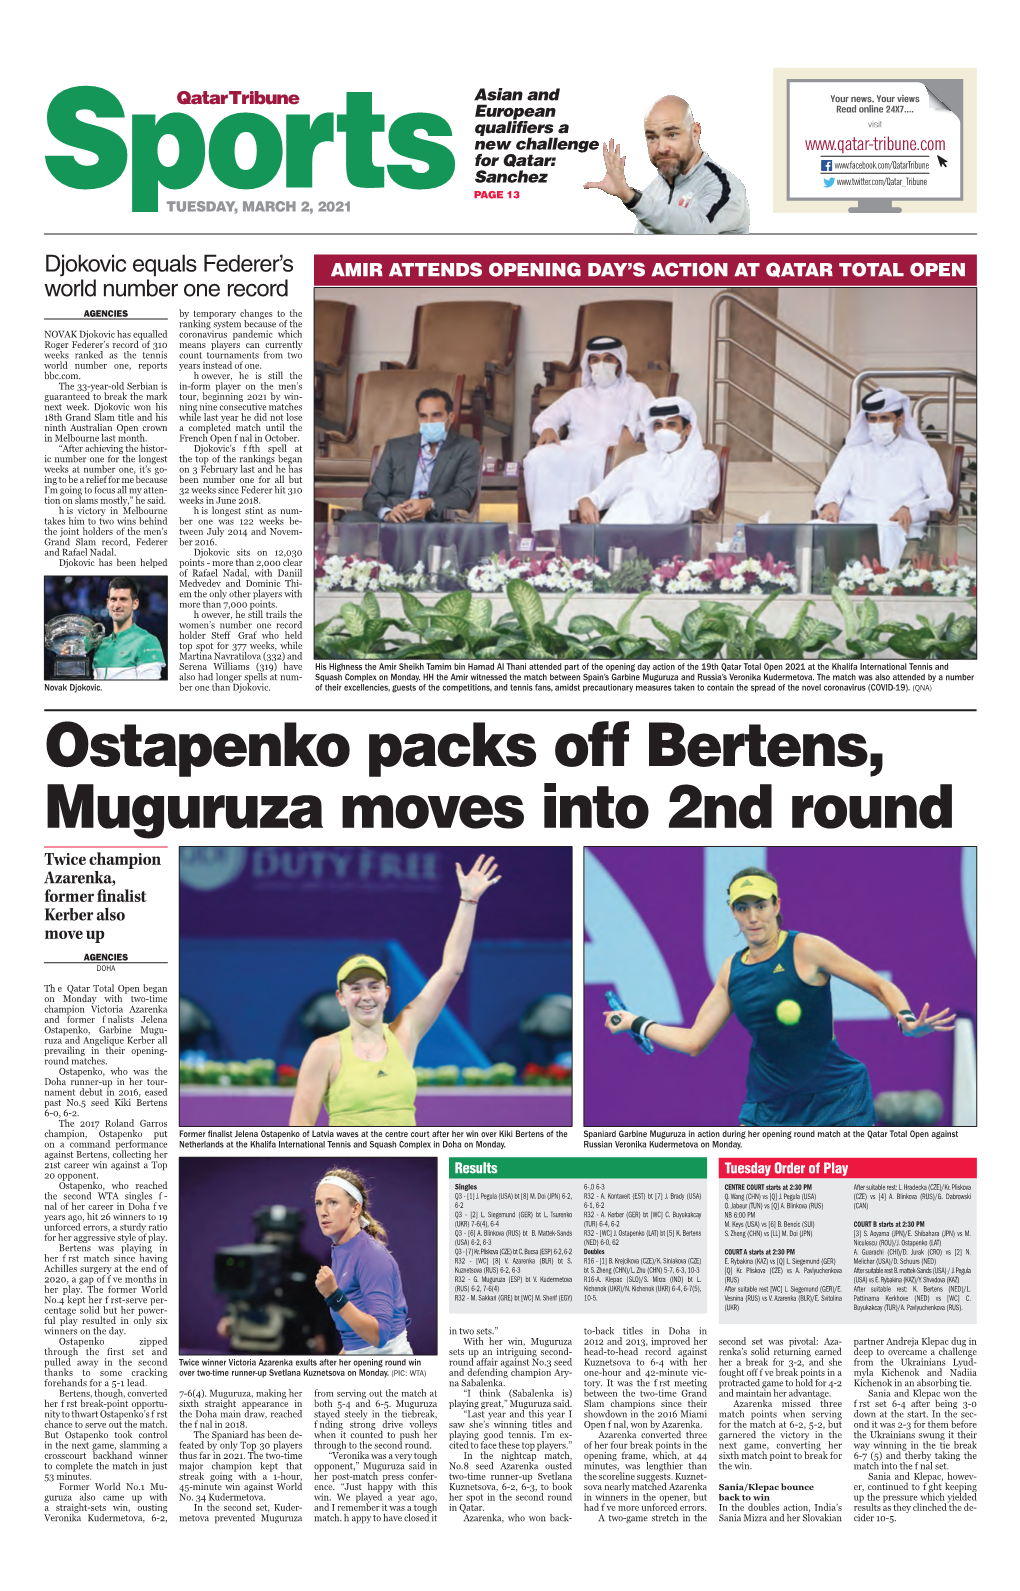 Ostapenko Packs Off Bertens, Muguruza Moves Into 2Nd Round Twice Champion Azarenka, Former Finalist Kerber Also Move up Agencies Doha